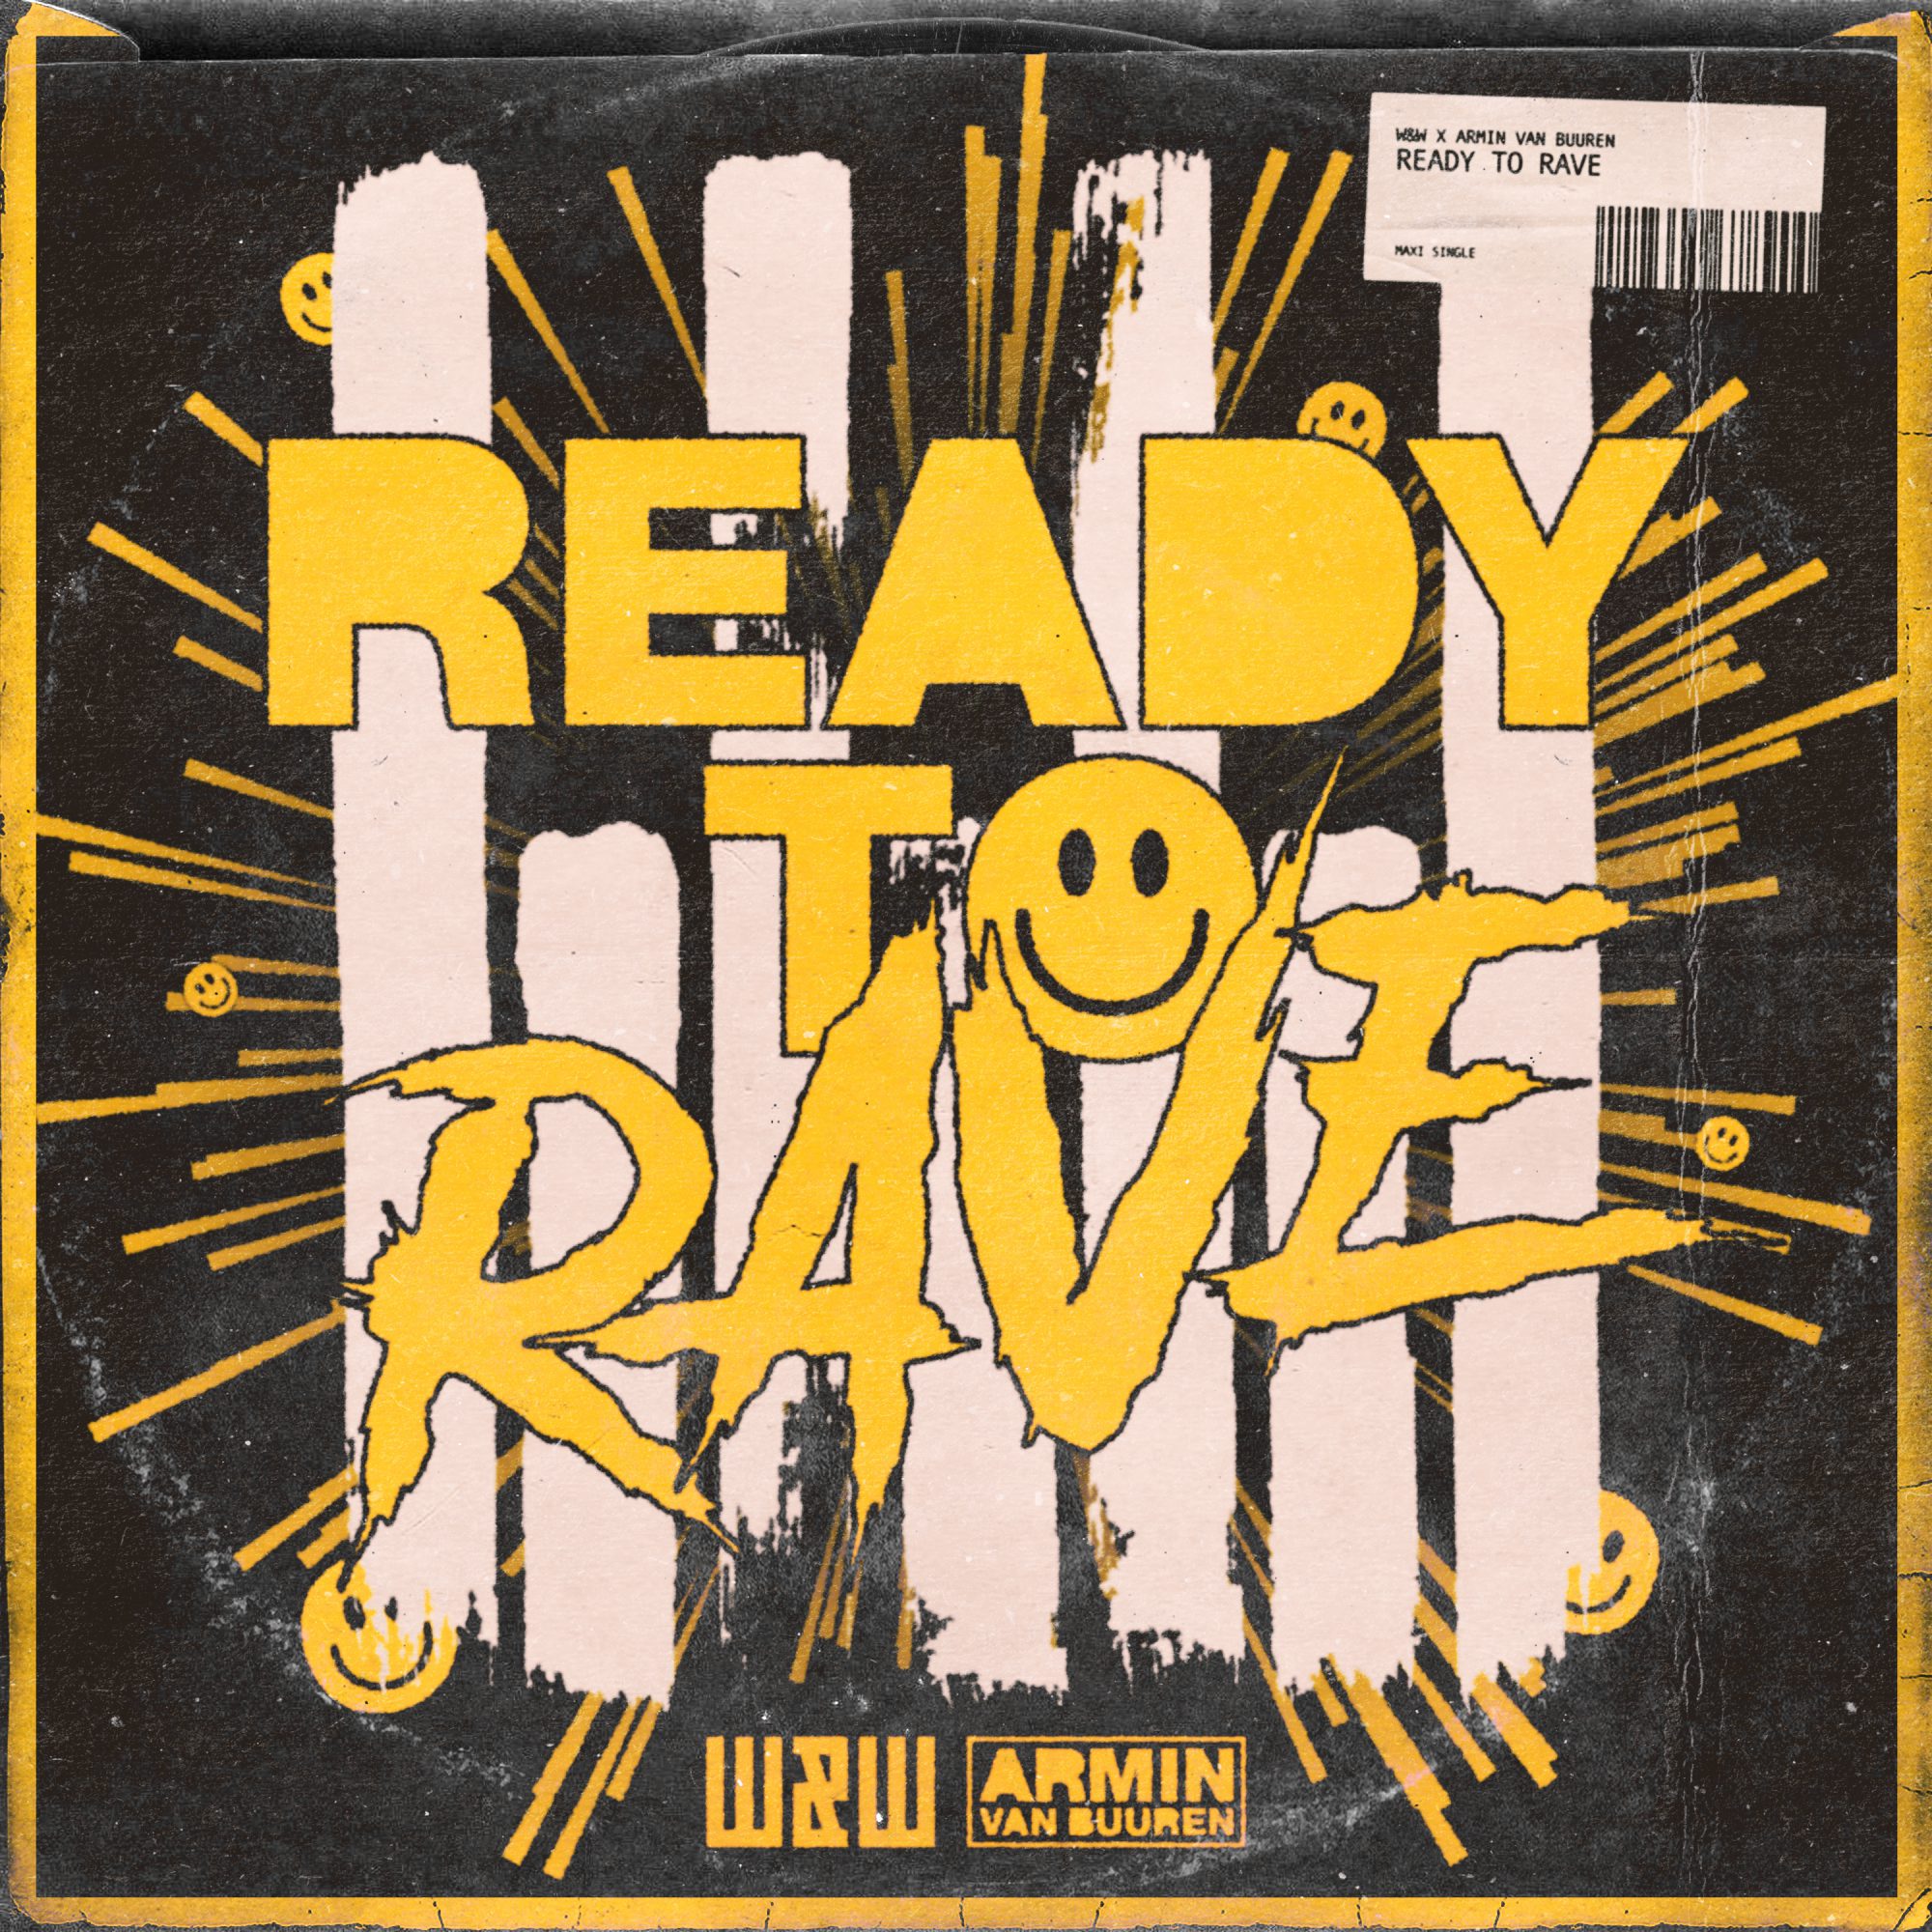 RVC003-W&W & Armin van Buuren - Ready to Rave